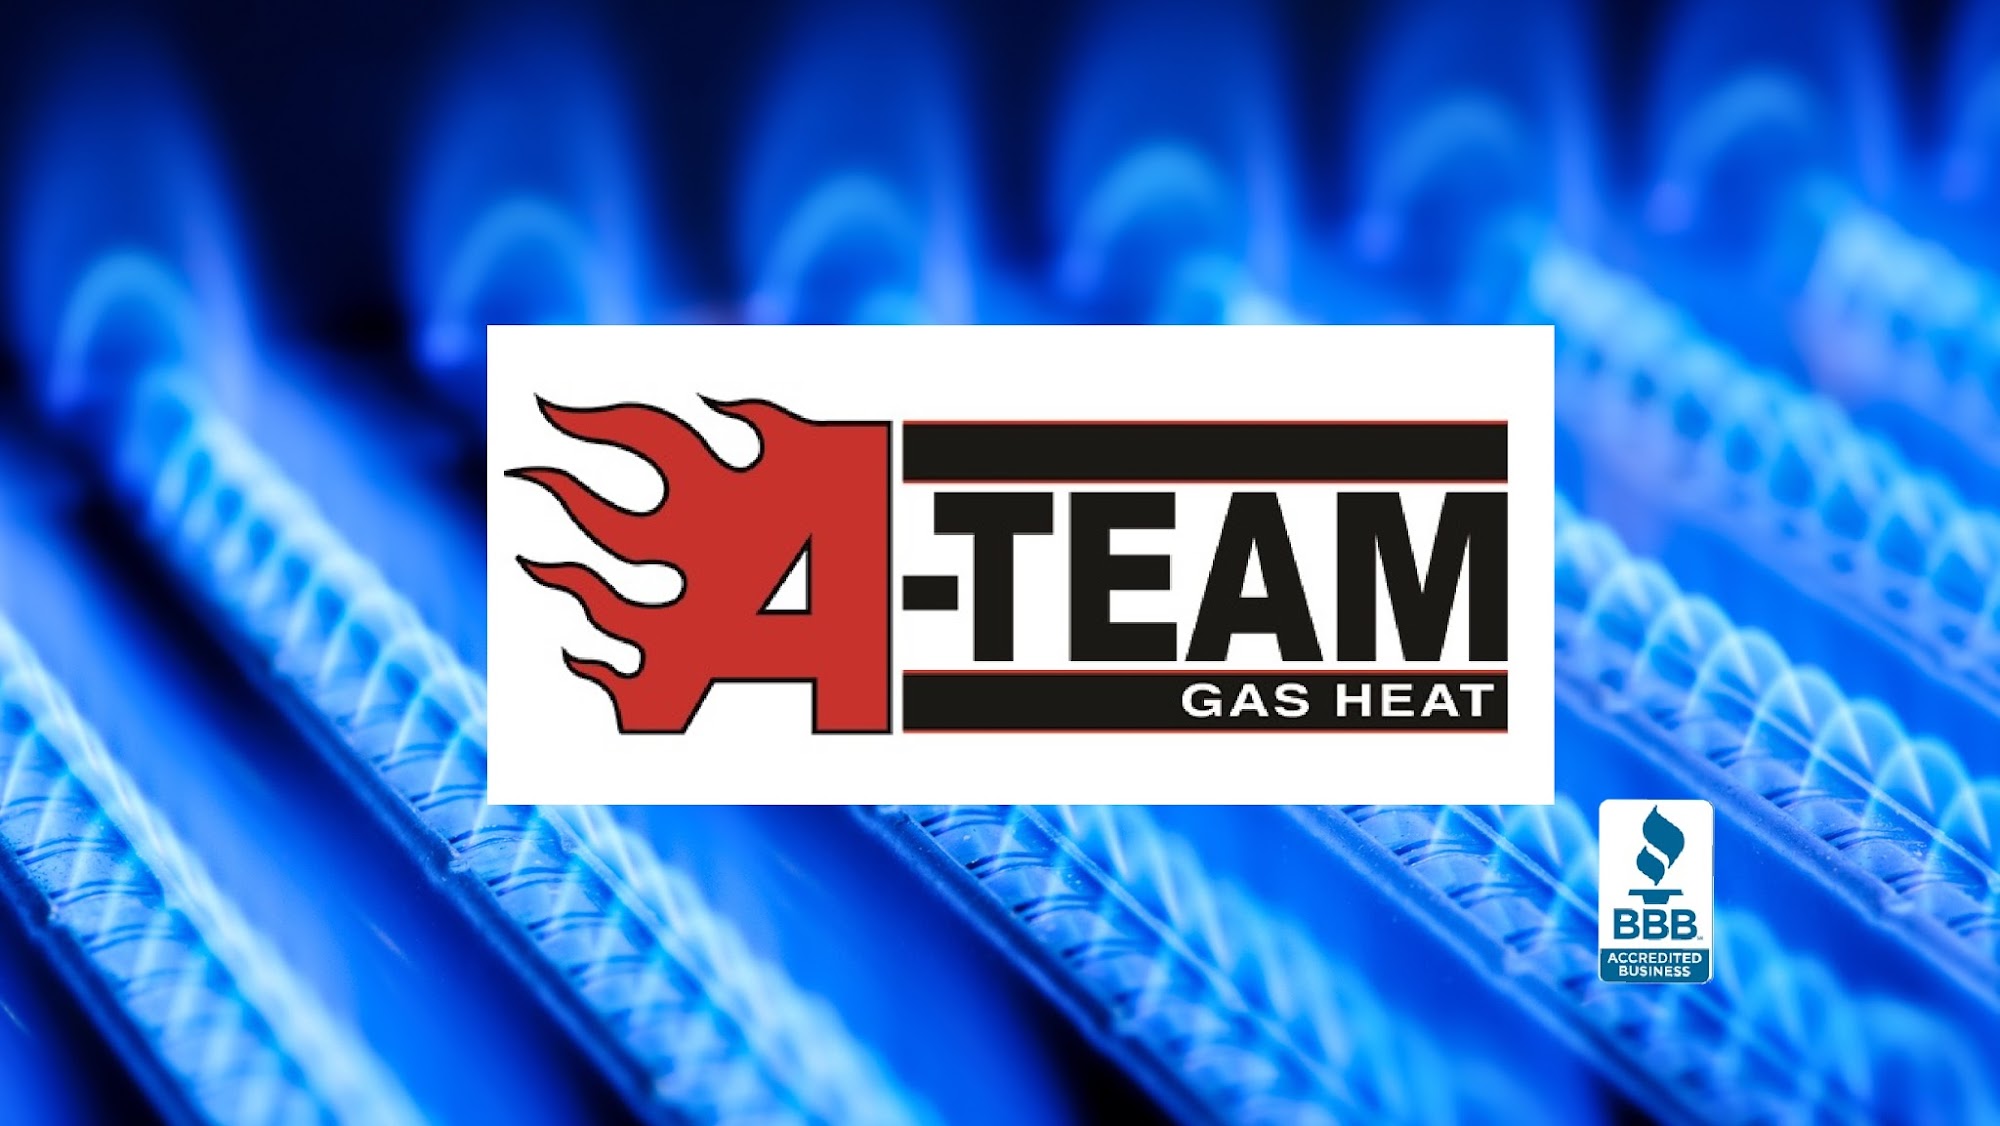 A-Team Gas Heat